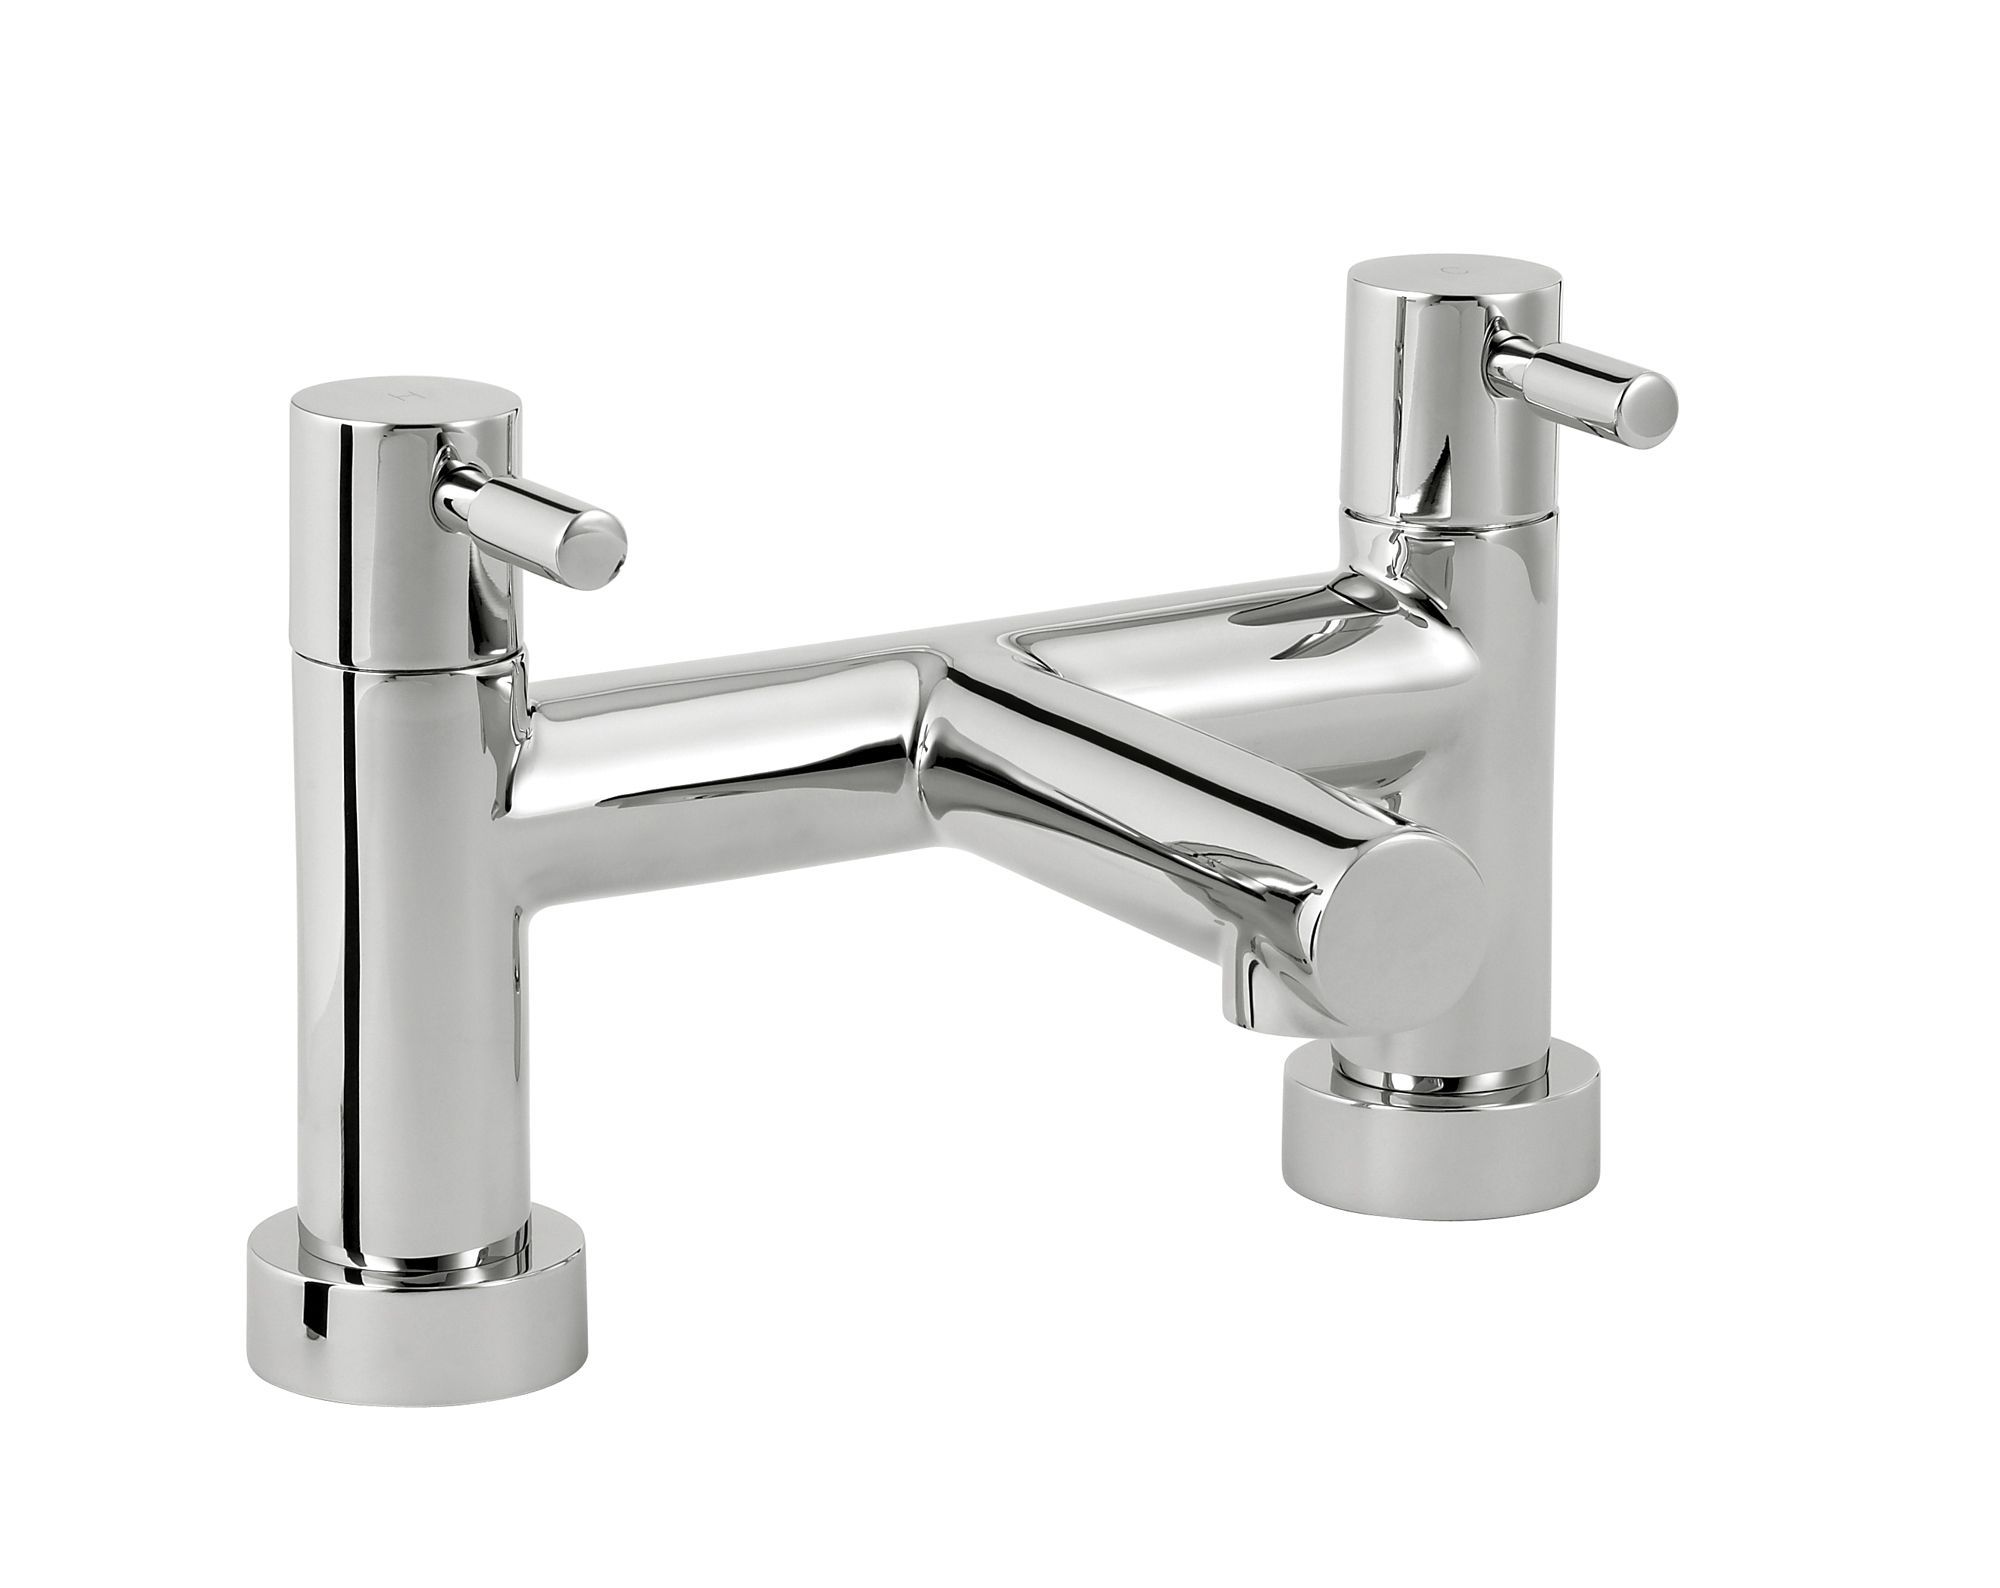 b&q bathroom sinks and taps